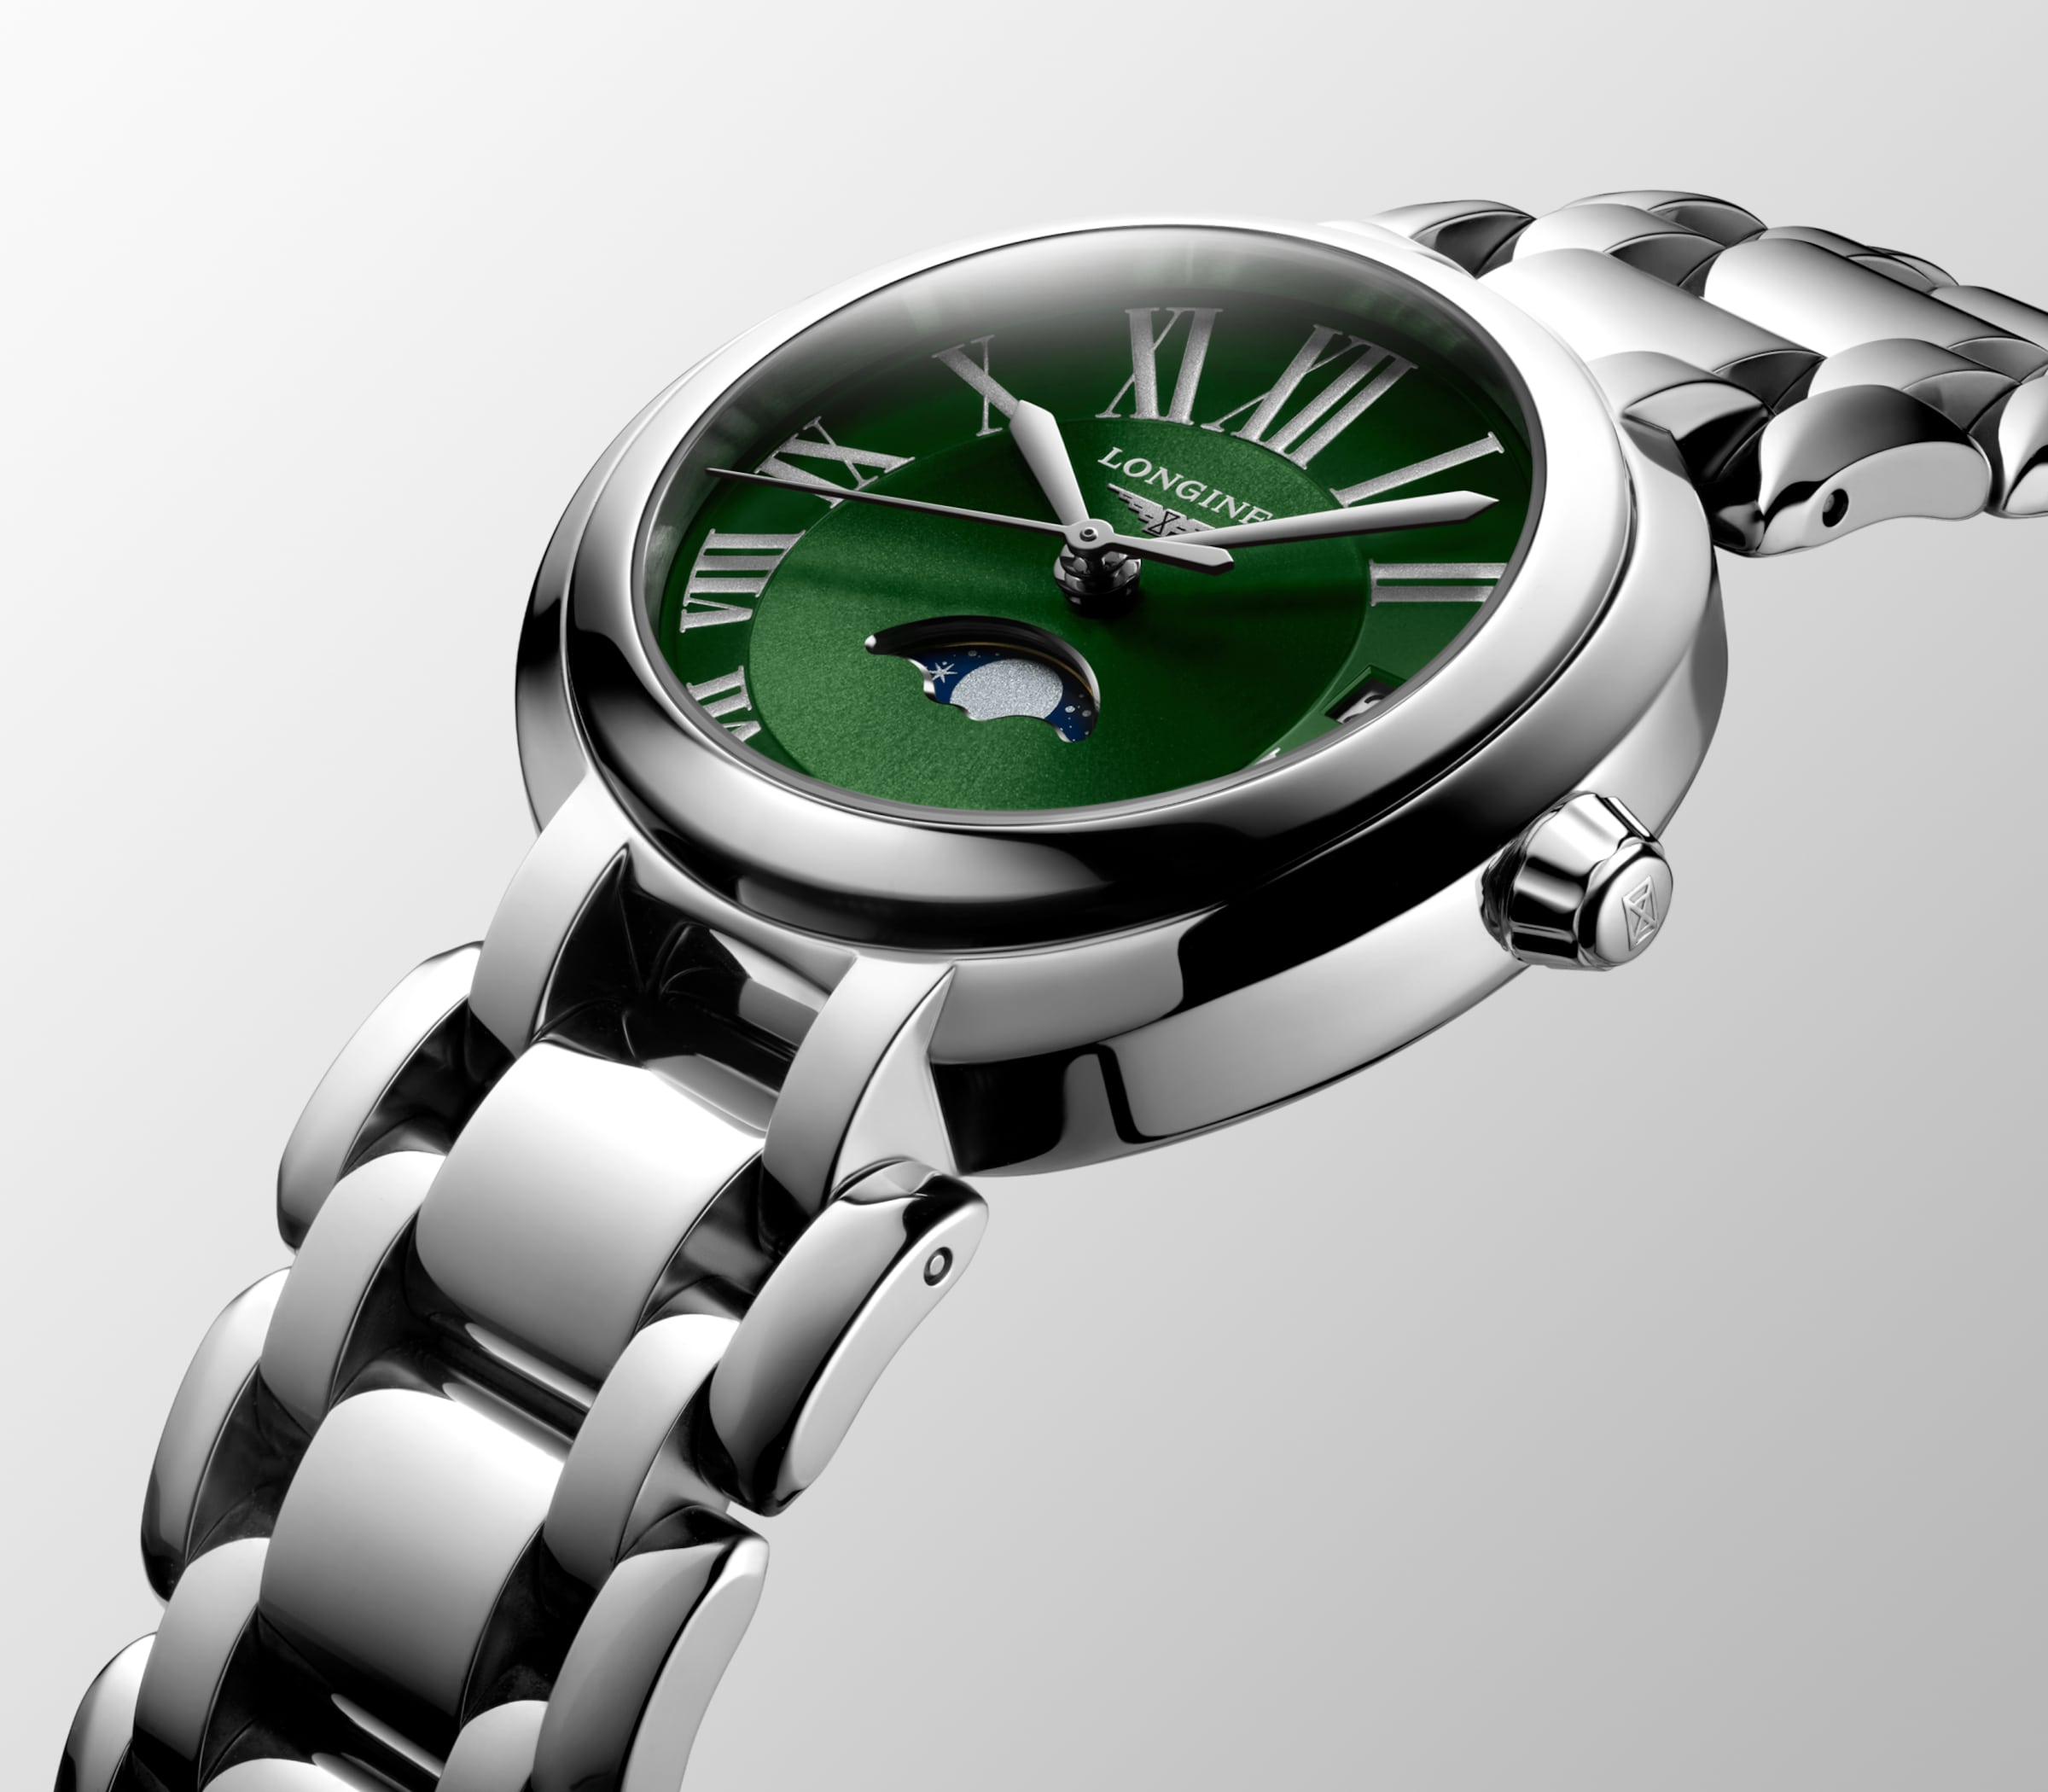 Longines PRIMALUNA Quartz Stainless steel Watch - L8.115.4.61.6